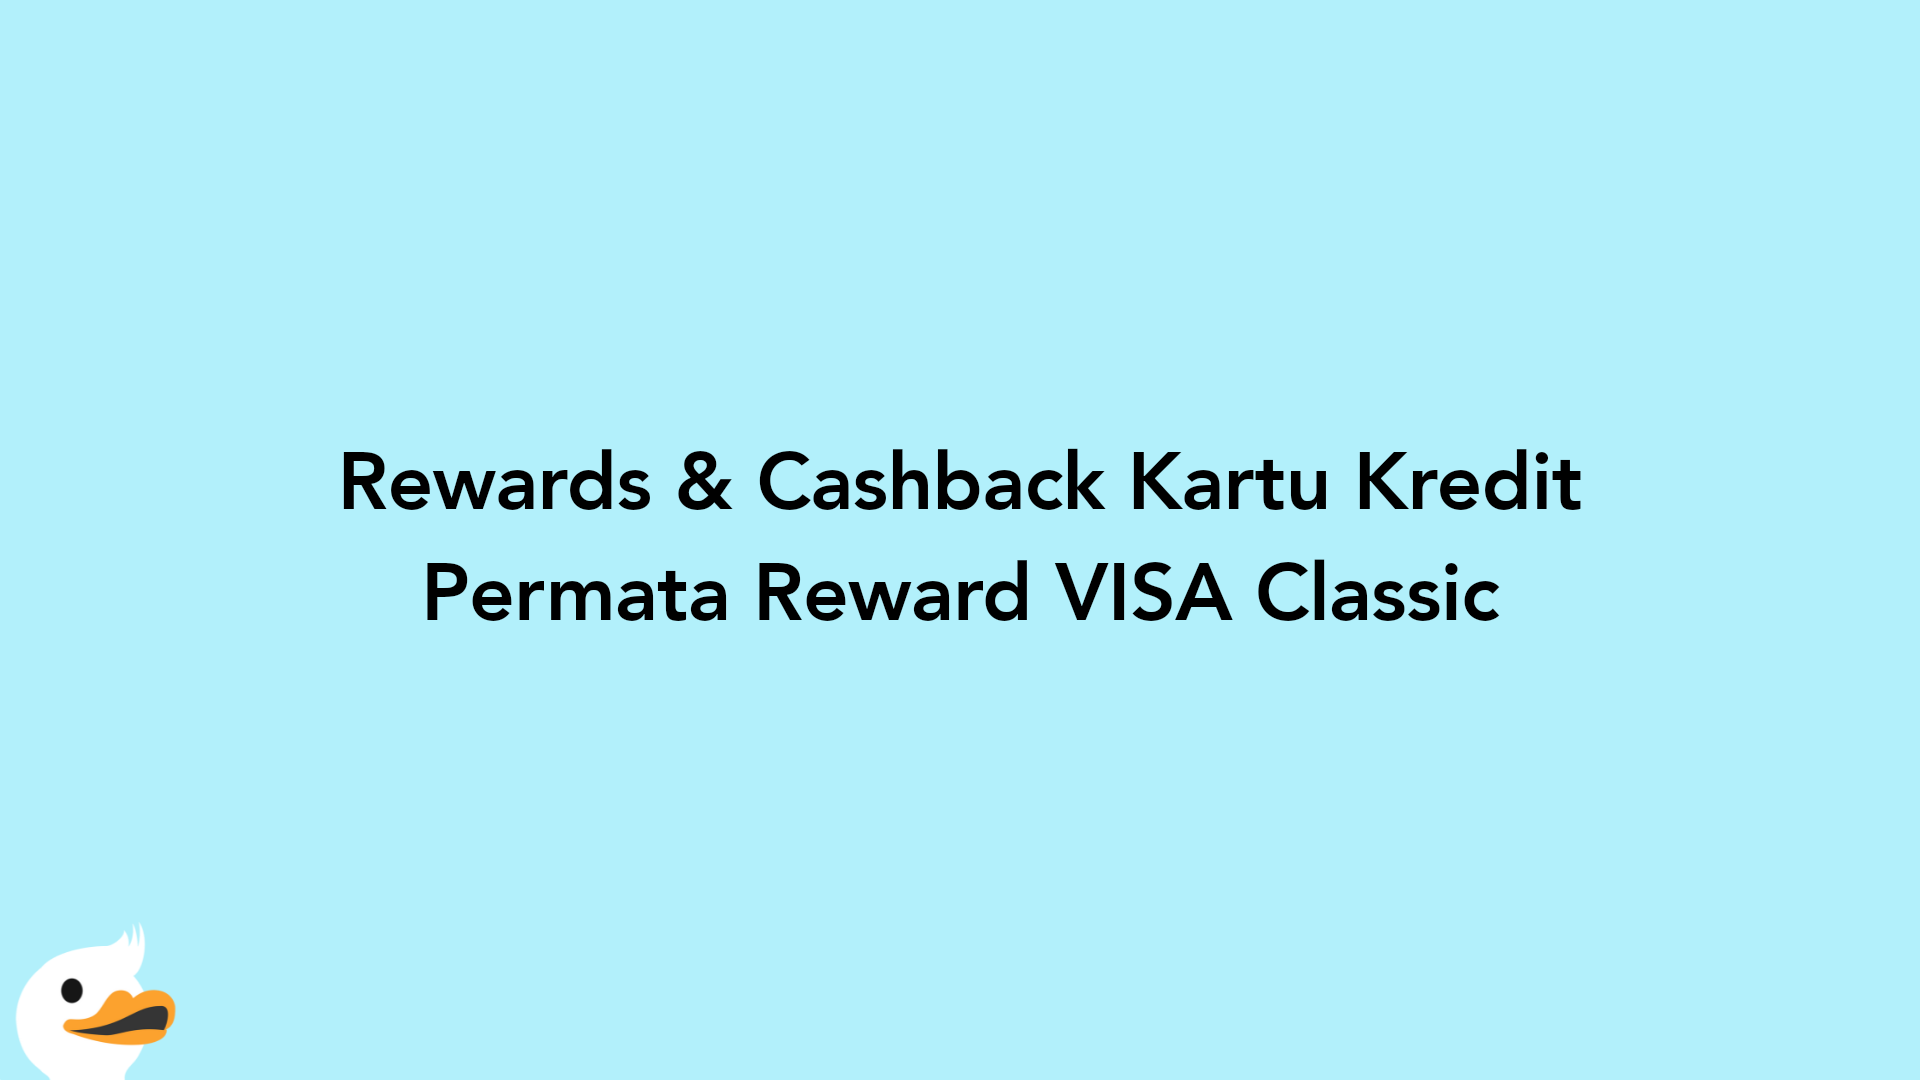 Rewards & Cashback Kartu Kredit Permata Reward VISA Classic